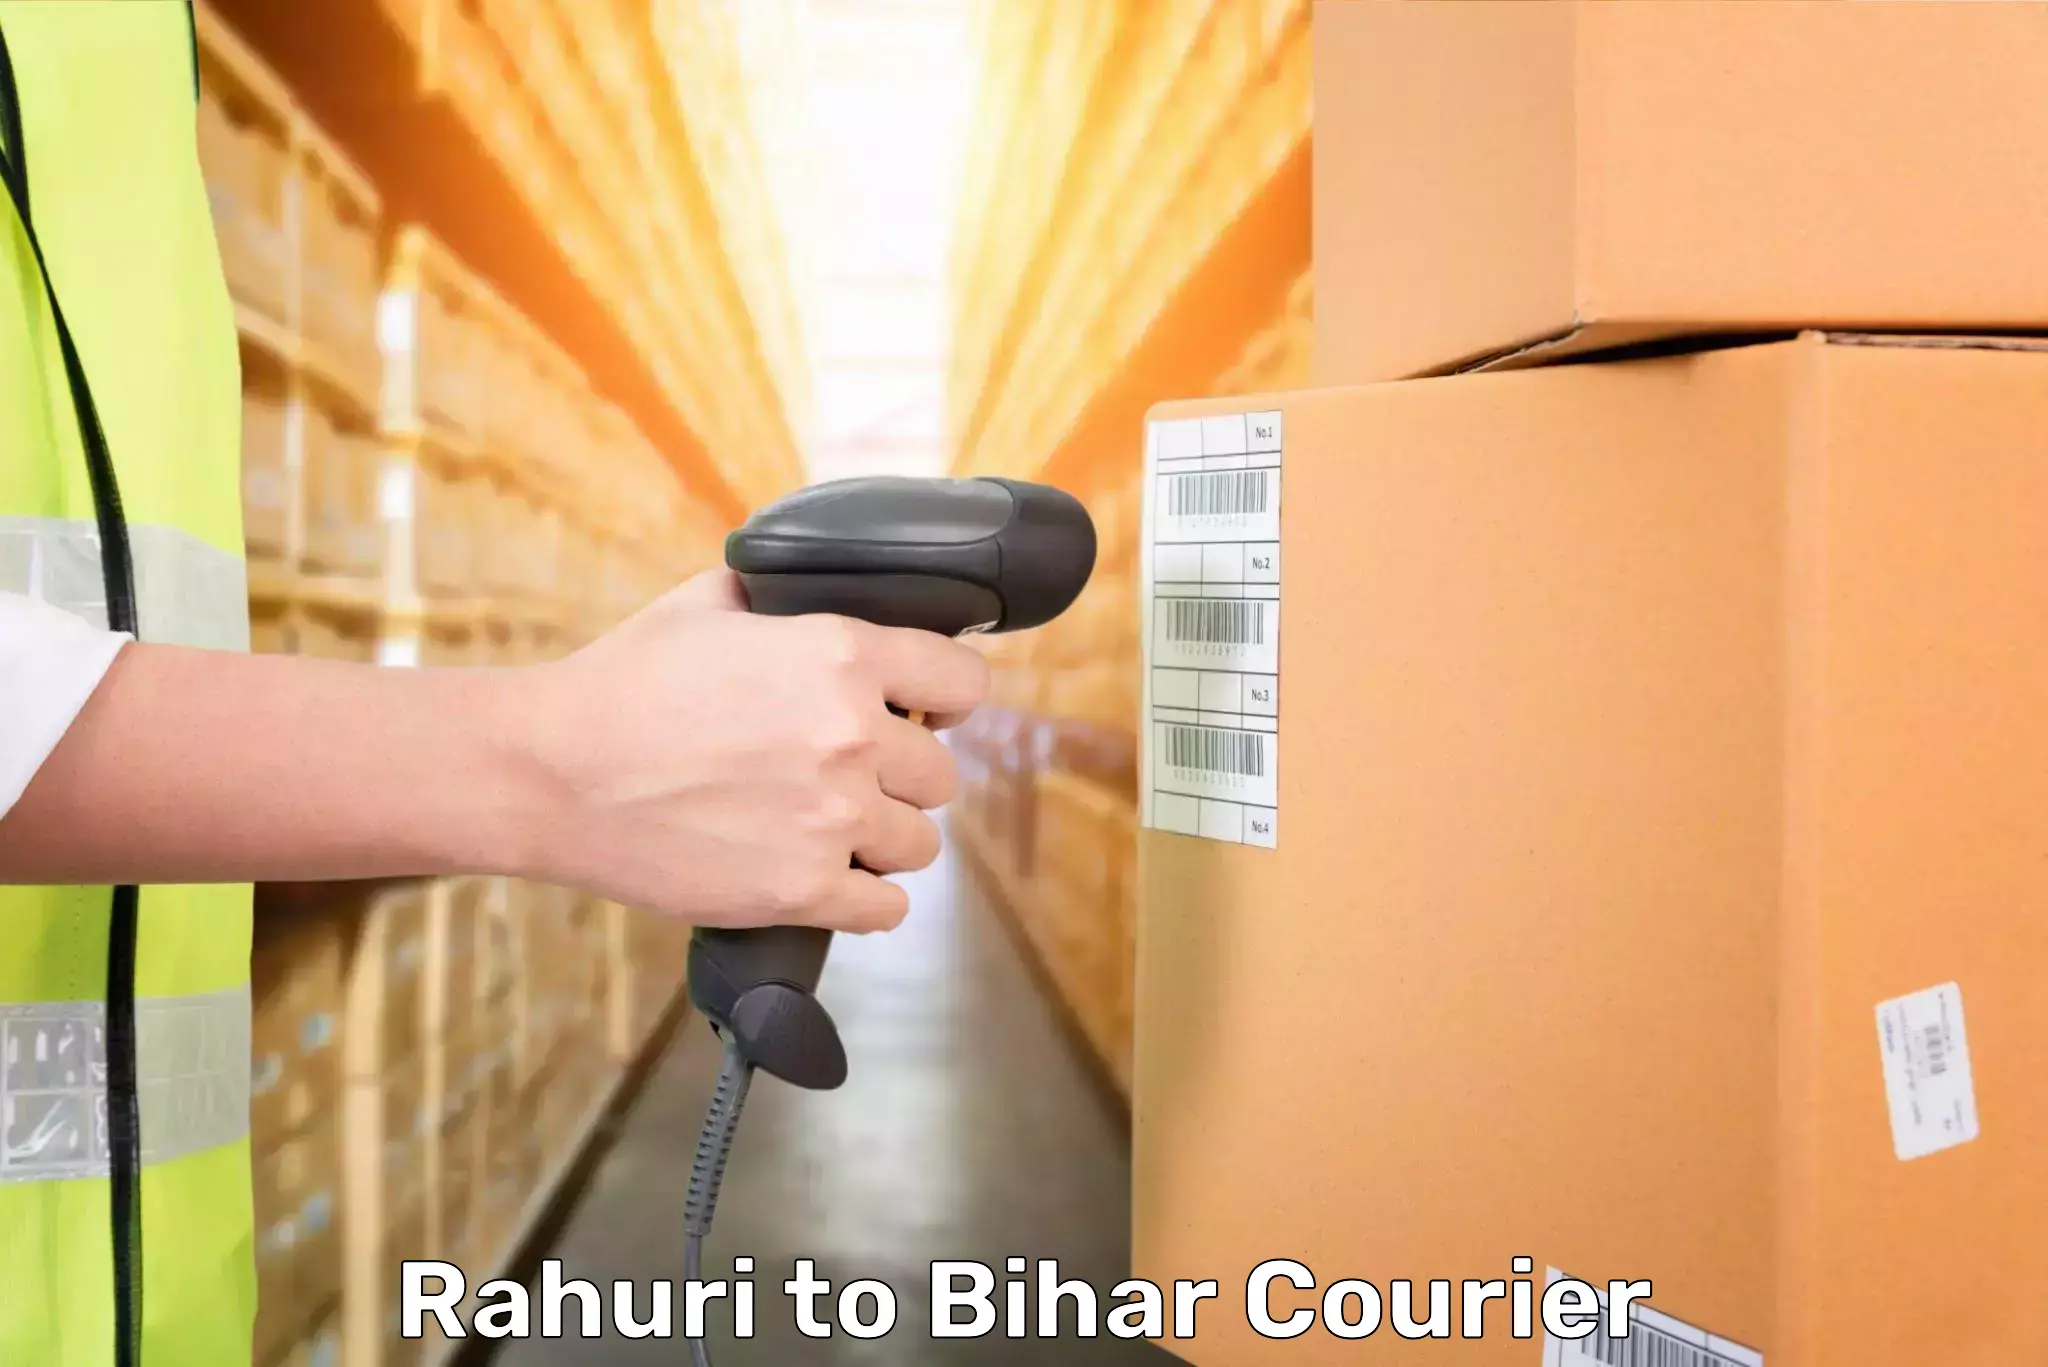 Luggage shipment specialists Rahuri to Biraul